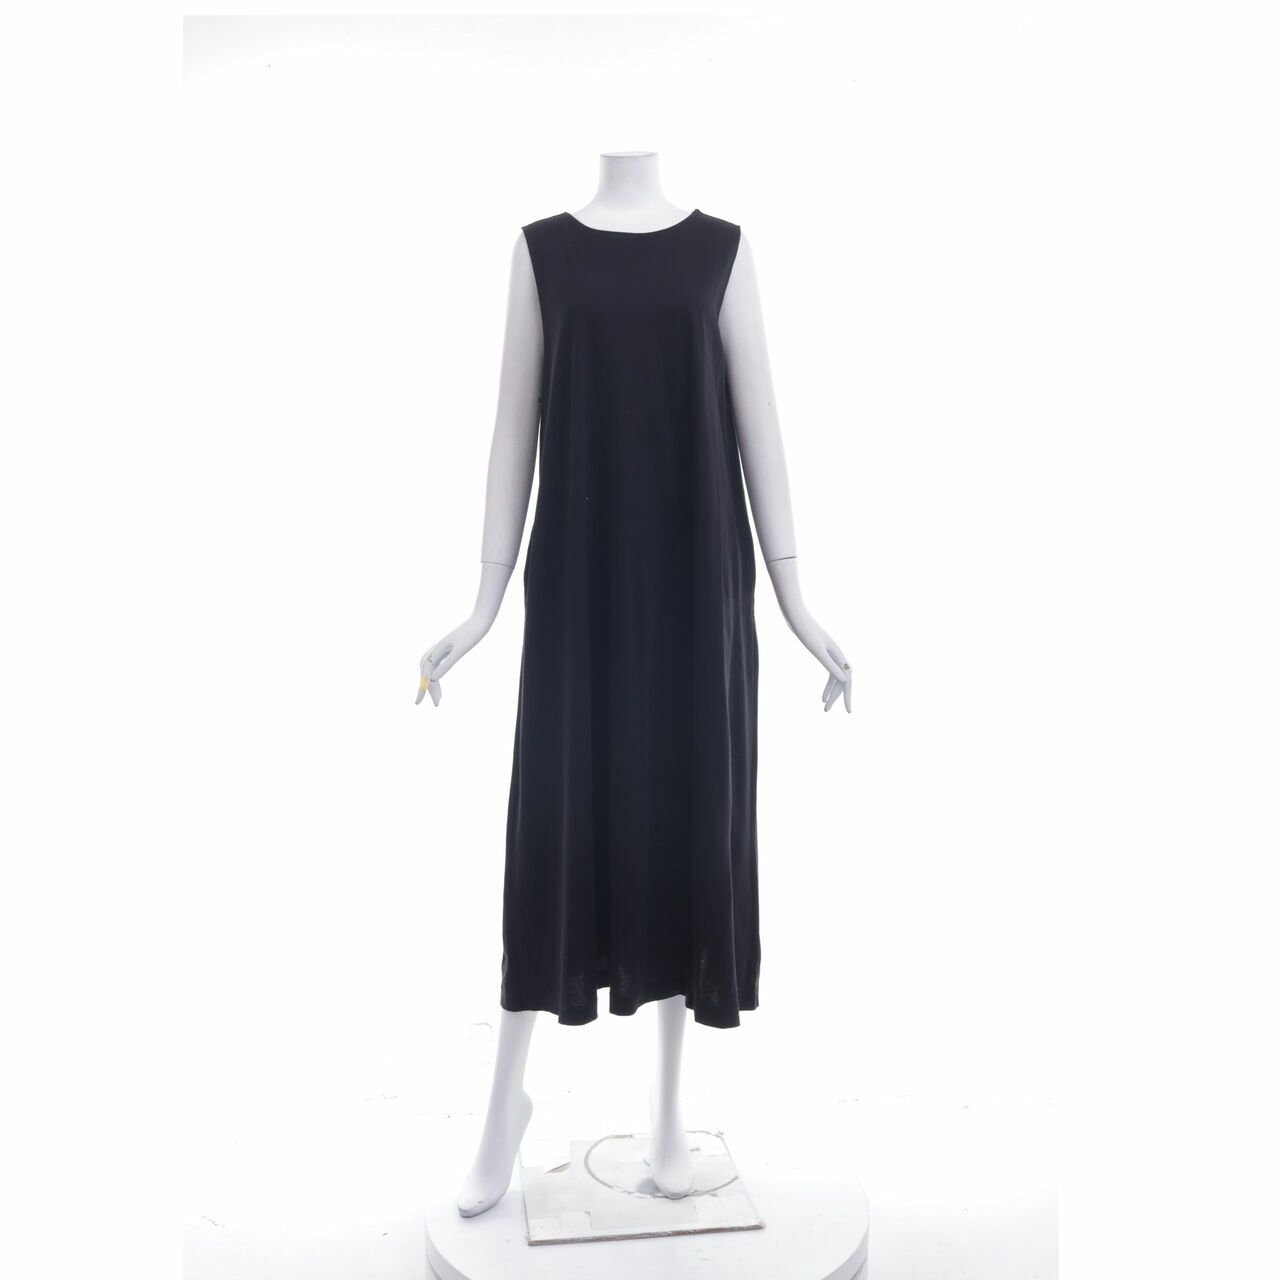 UNIQLO Black Long Dress